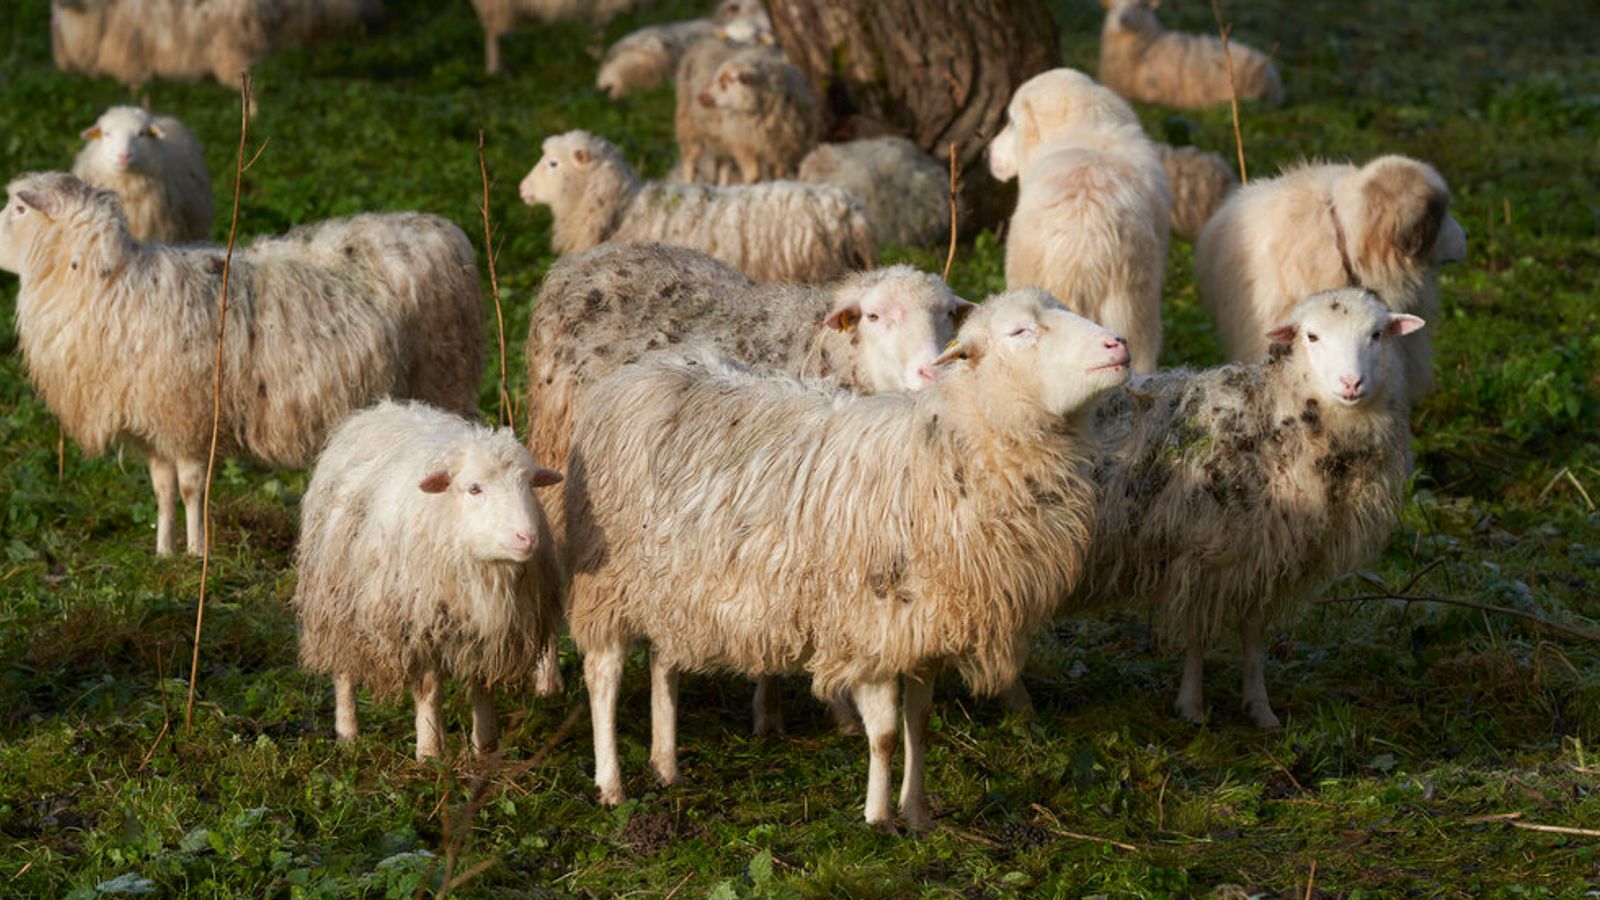 Herd of sheep eats 100kg of cannabis in Greece after Storm Daniel floods